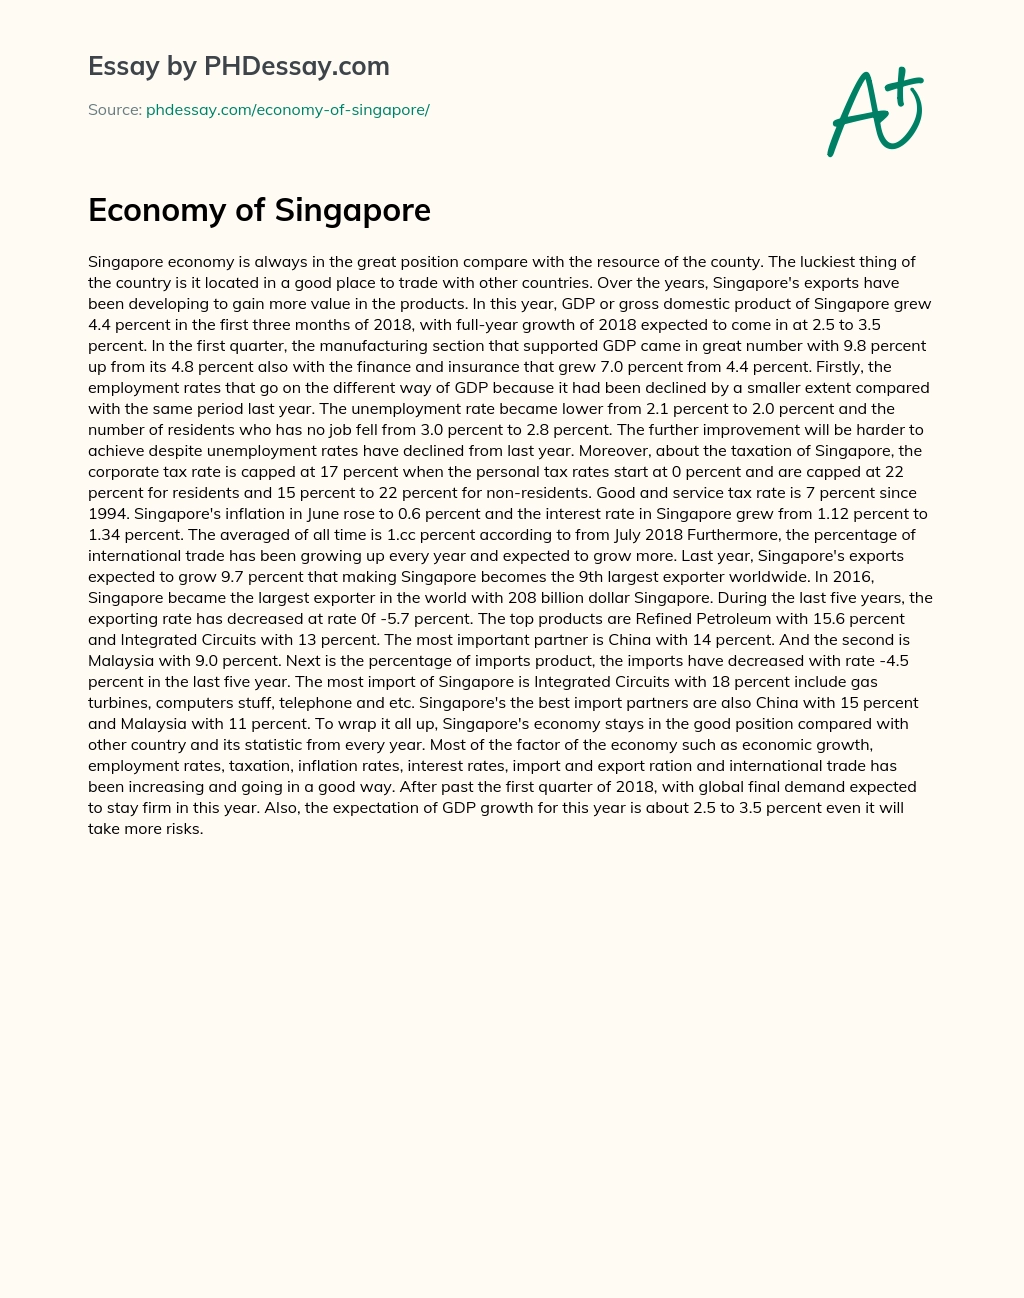 Economy of Singapore essay